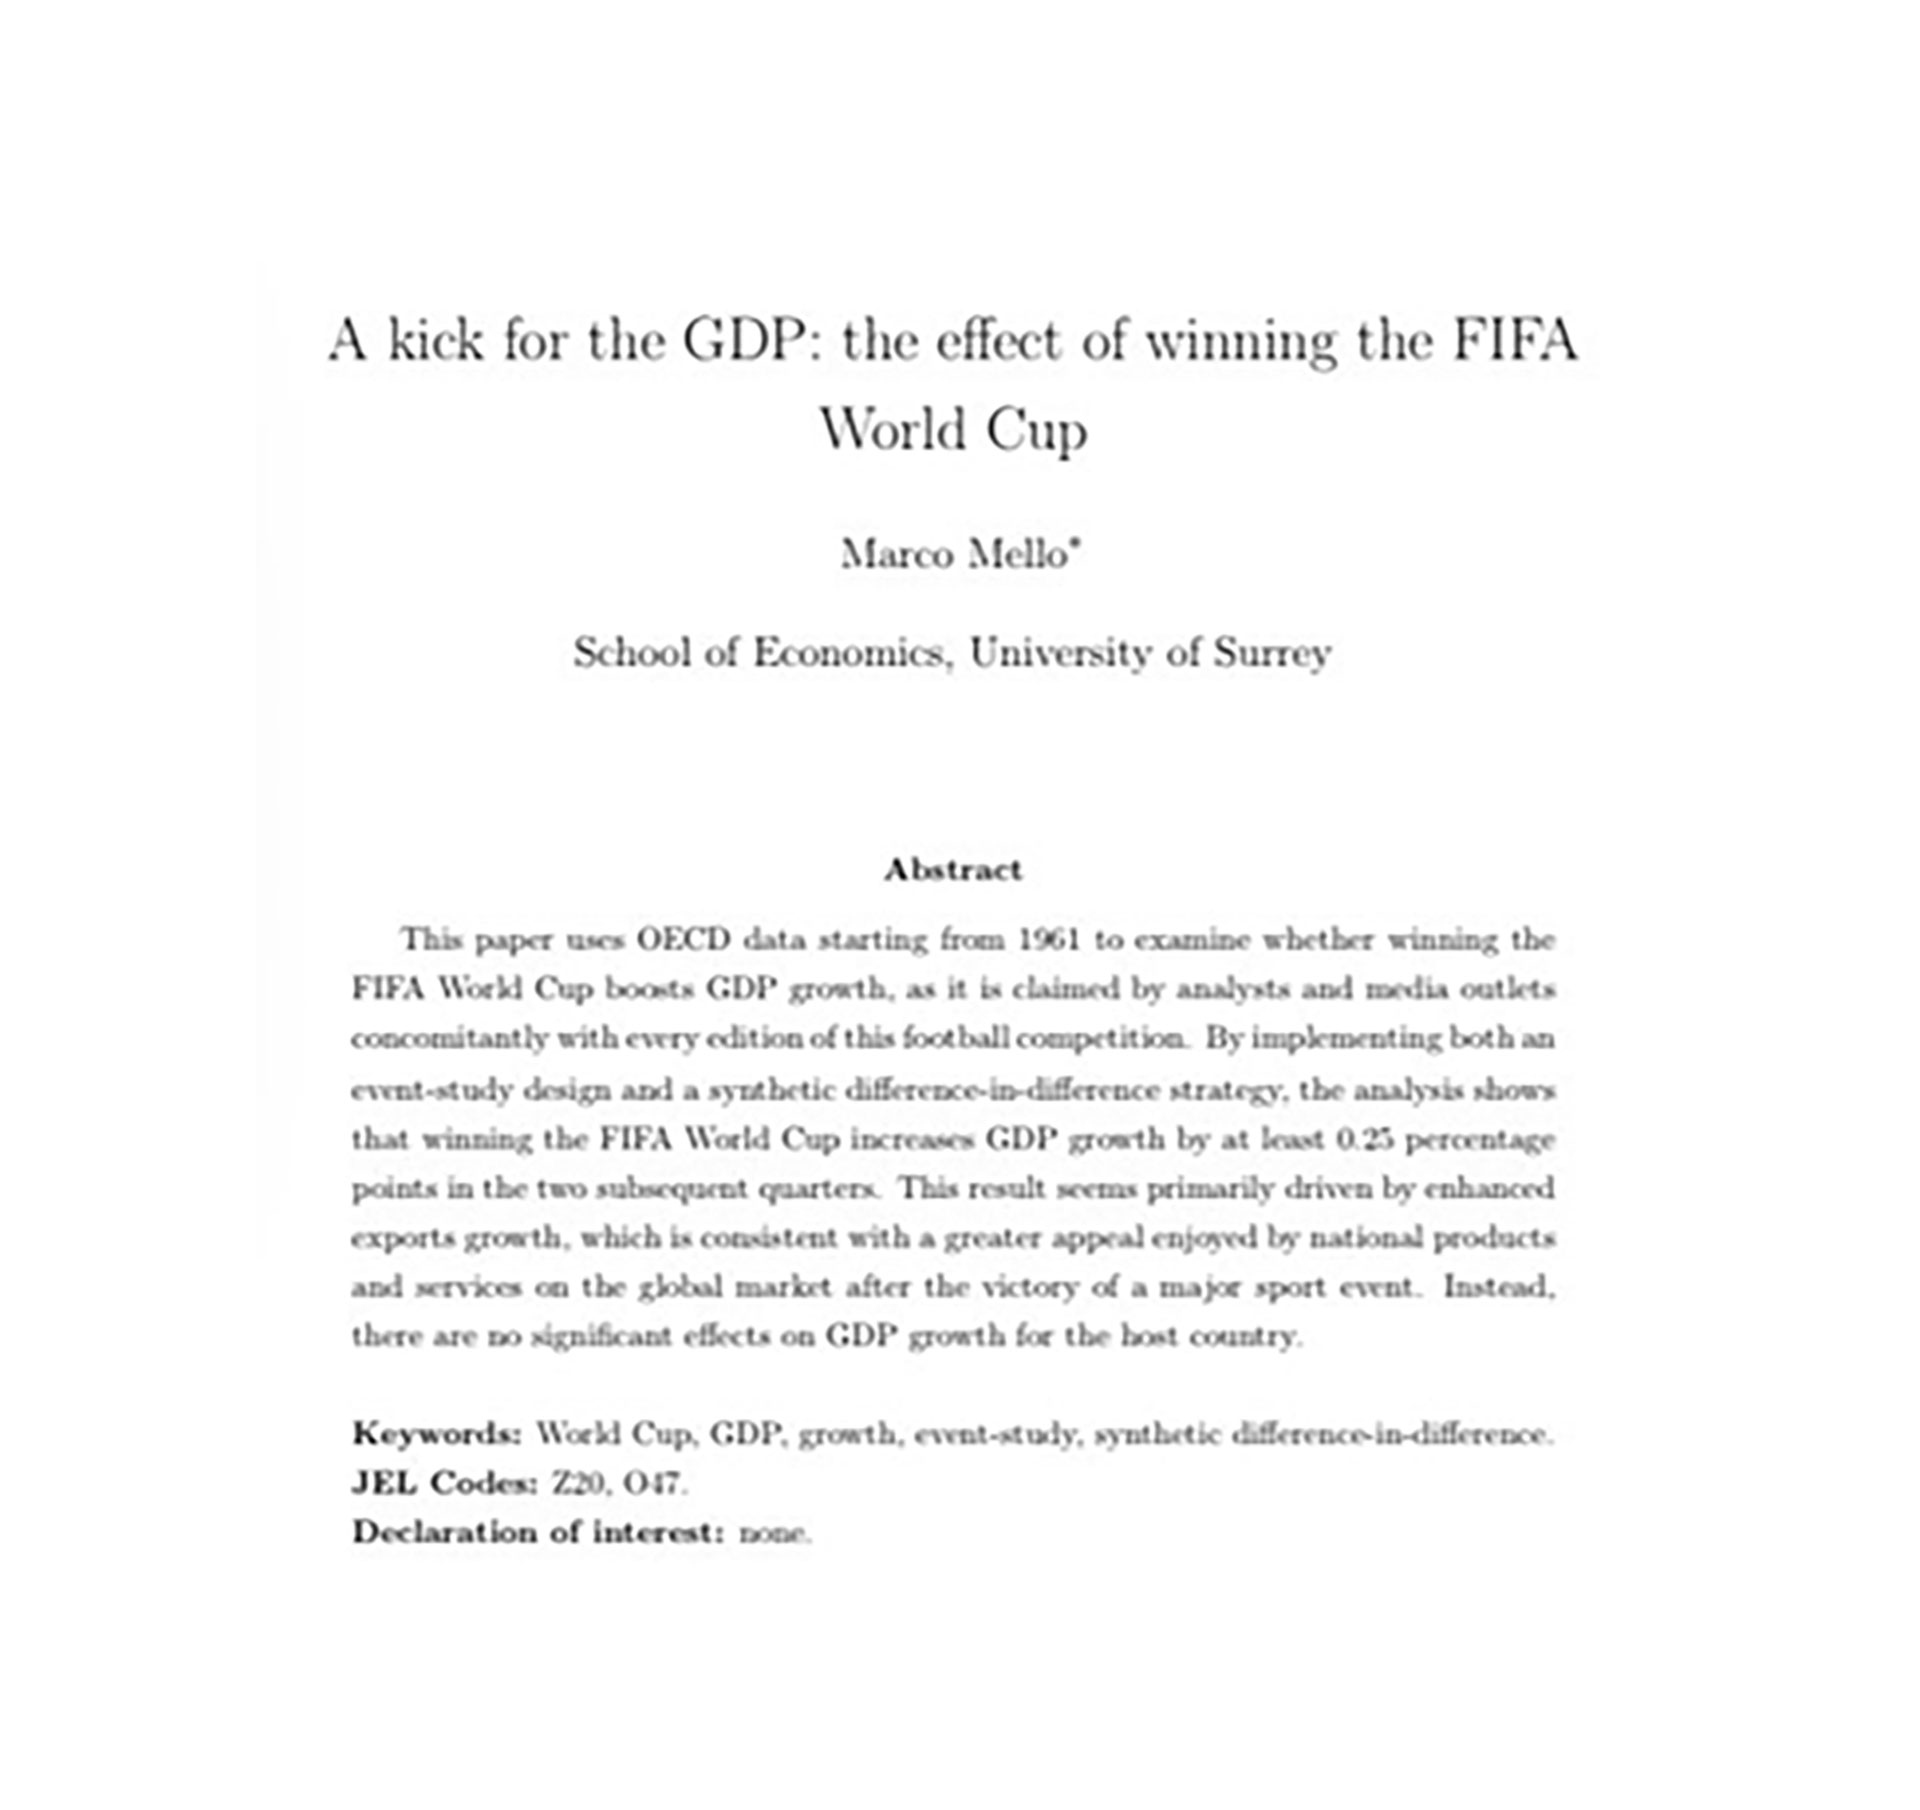 El paper sobre el efecto del Mundial sobre el PBI